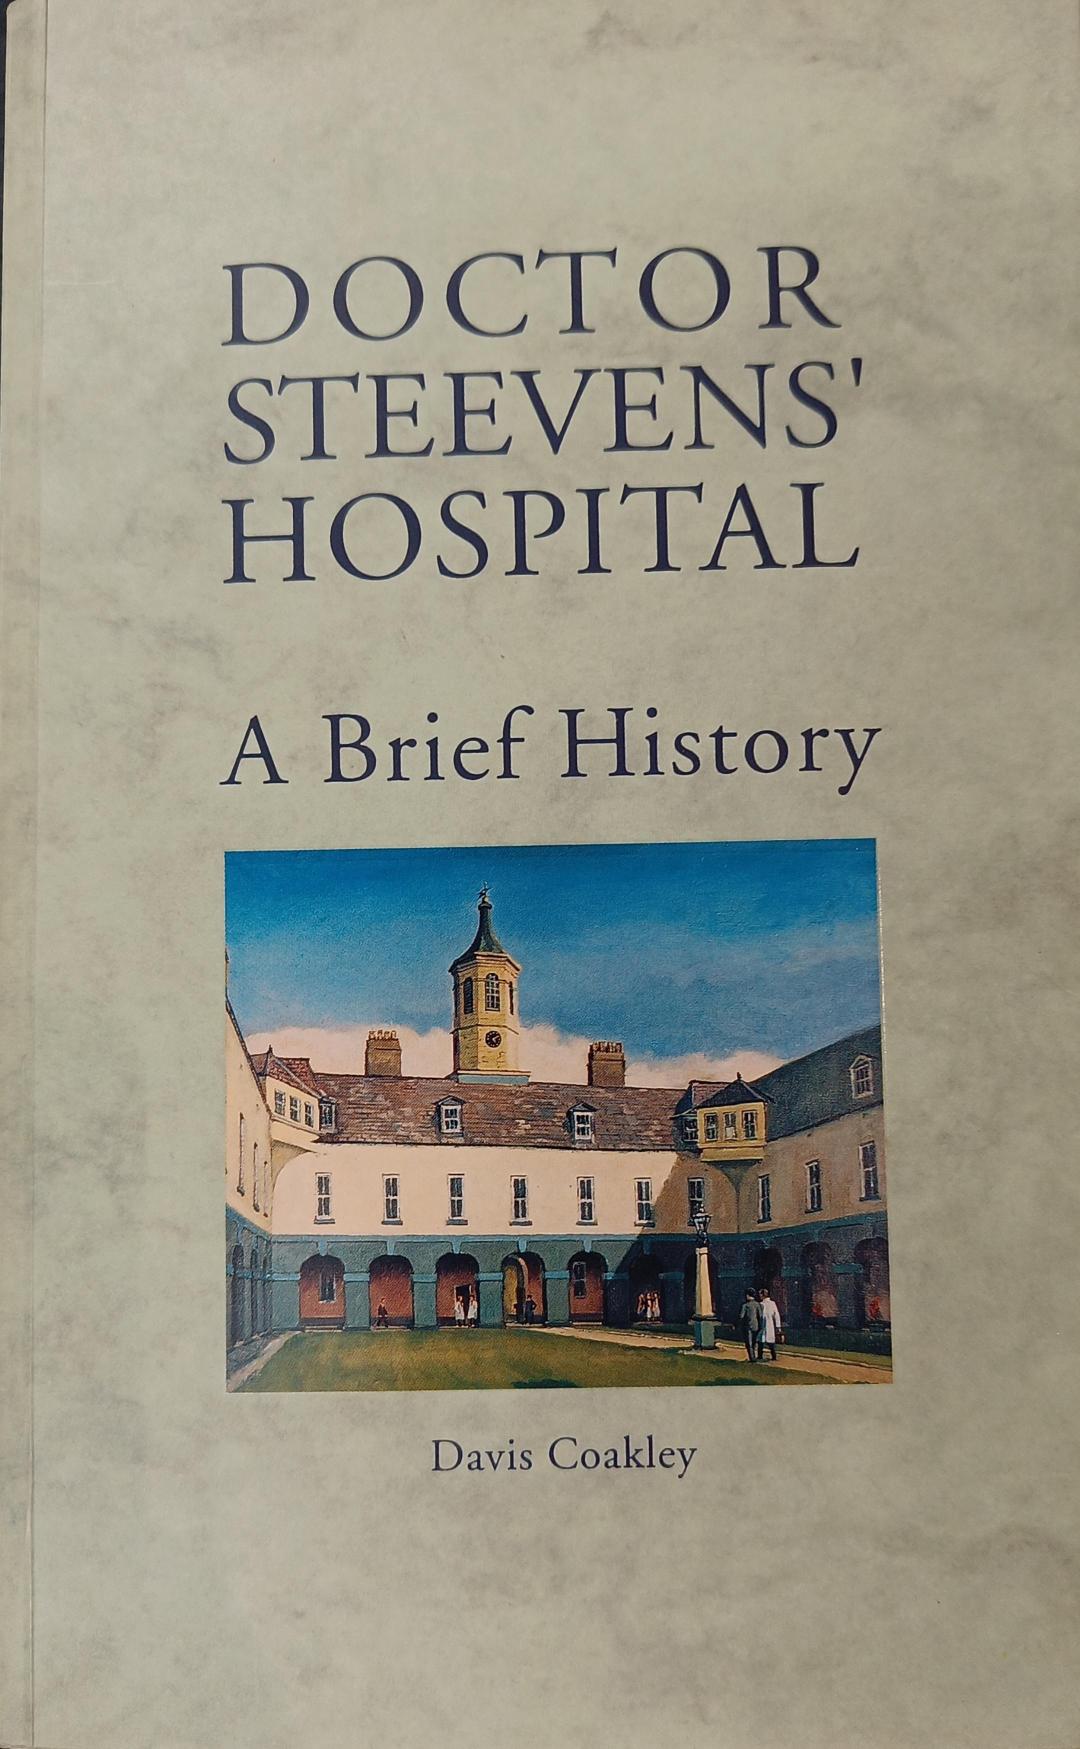 Doctor Steevens' Hospital: A Brief History, by Davis Coakley